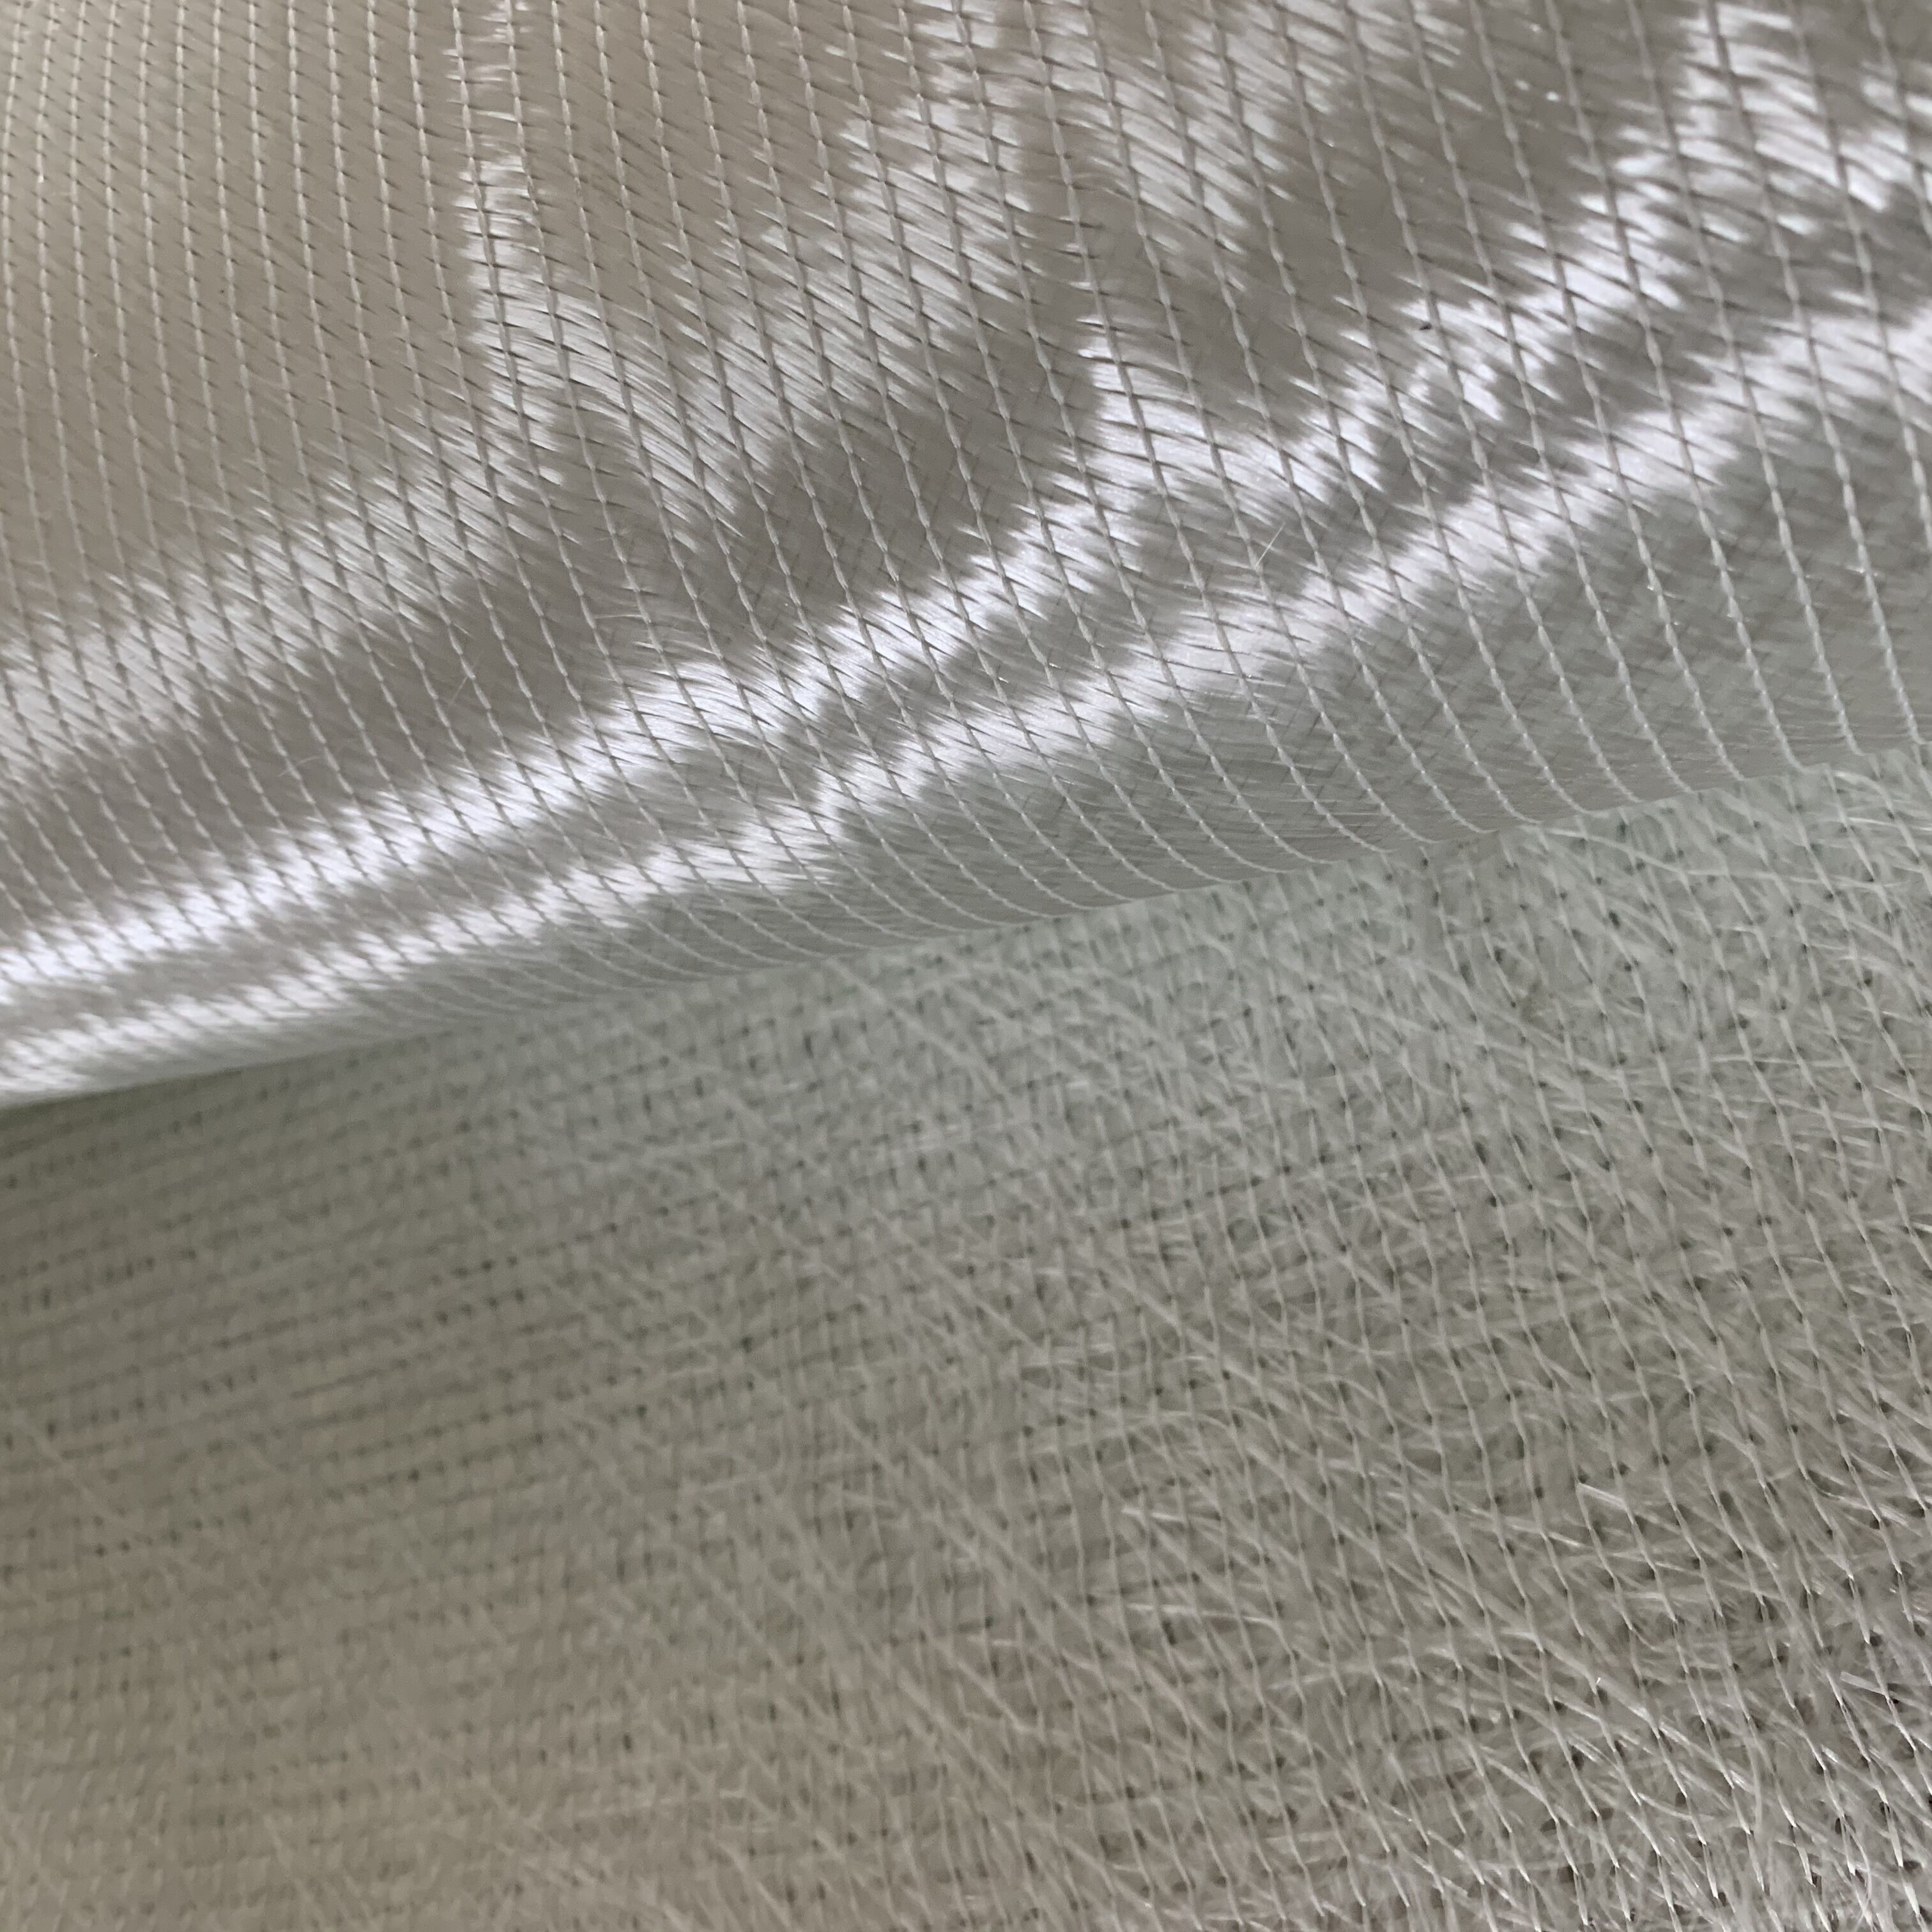 High Performance Glass Fiber Warp-Knitted Multiaxial Fabric